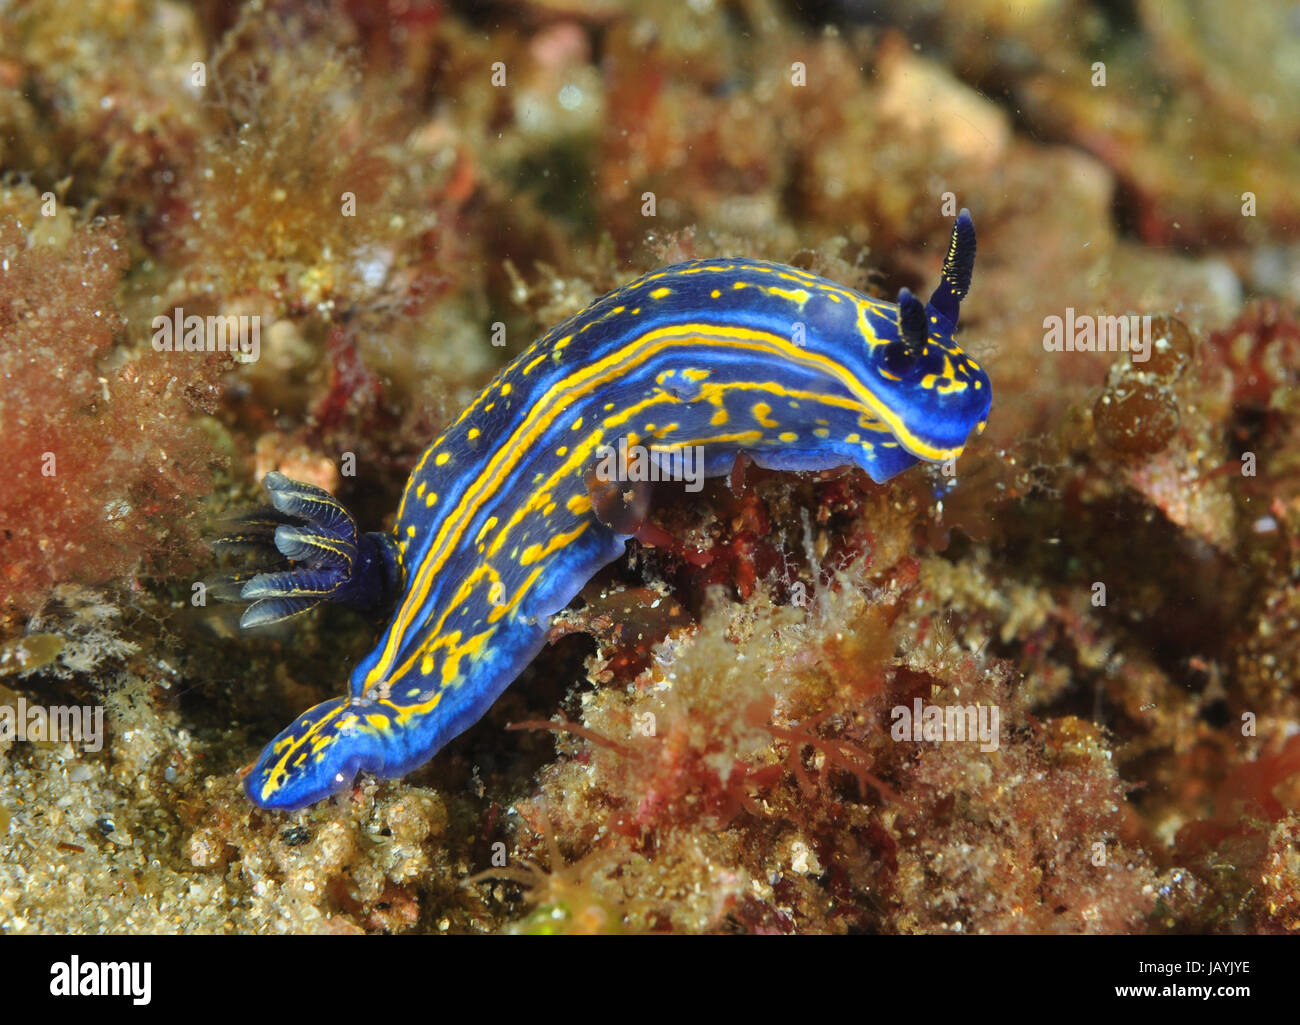 Colorful sea slug in a rocky bottom covered with algae Stock Photo